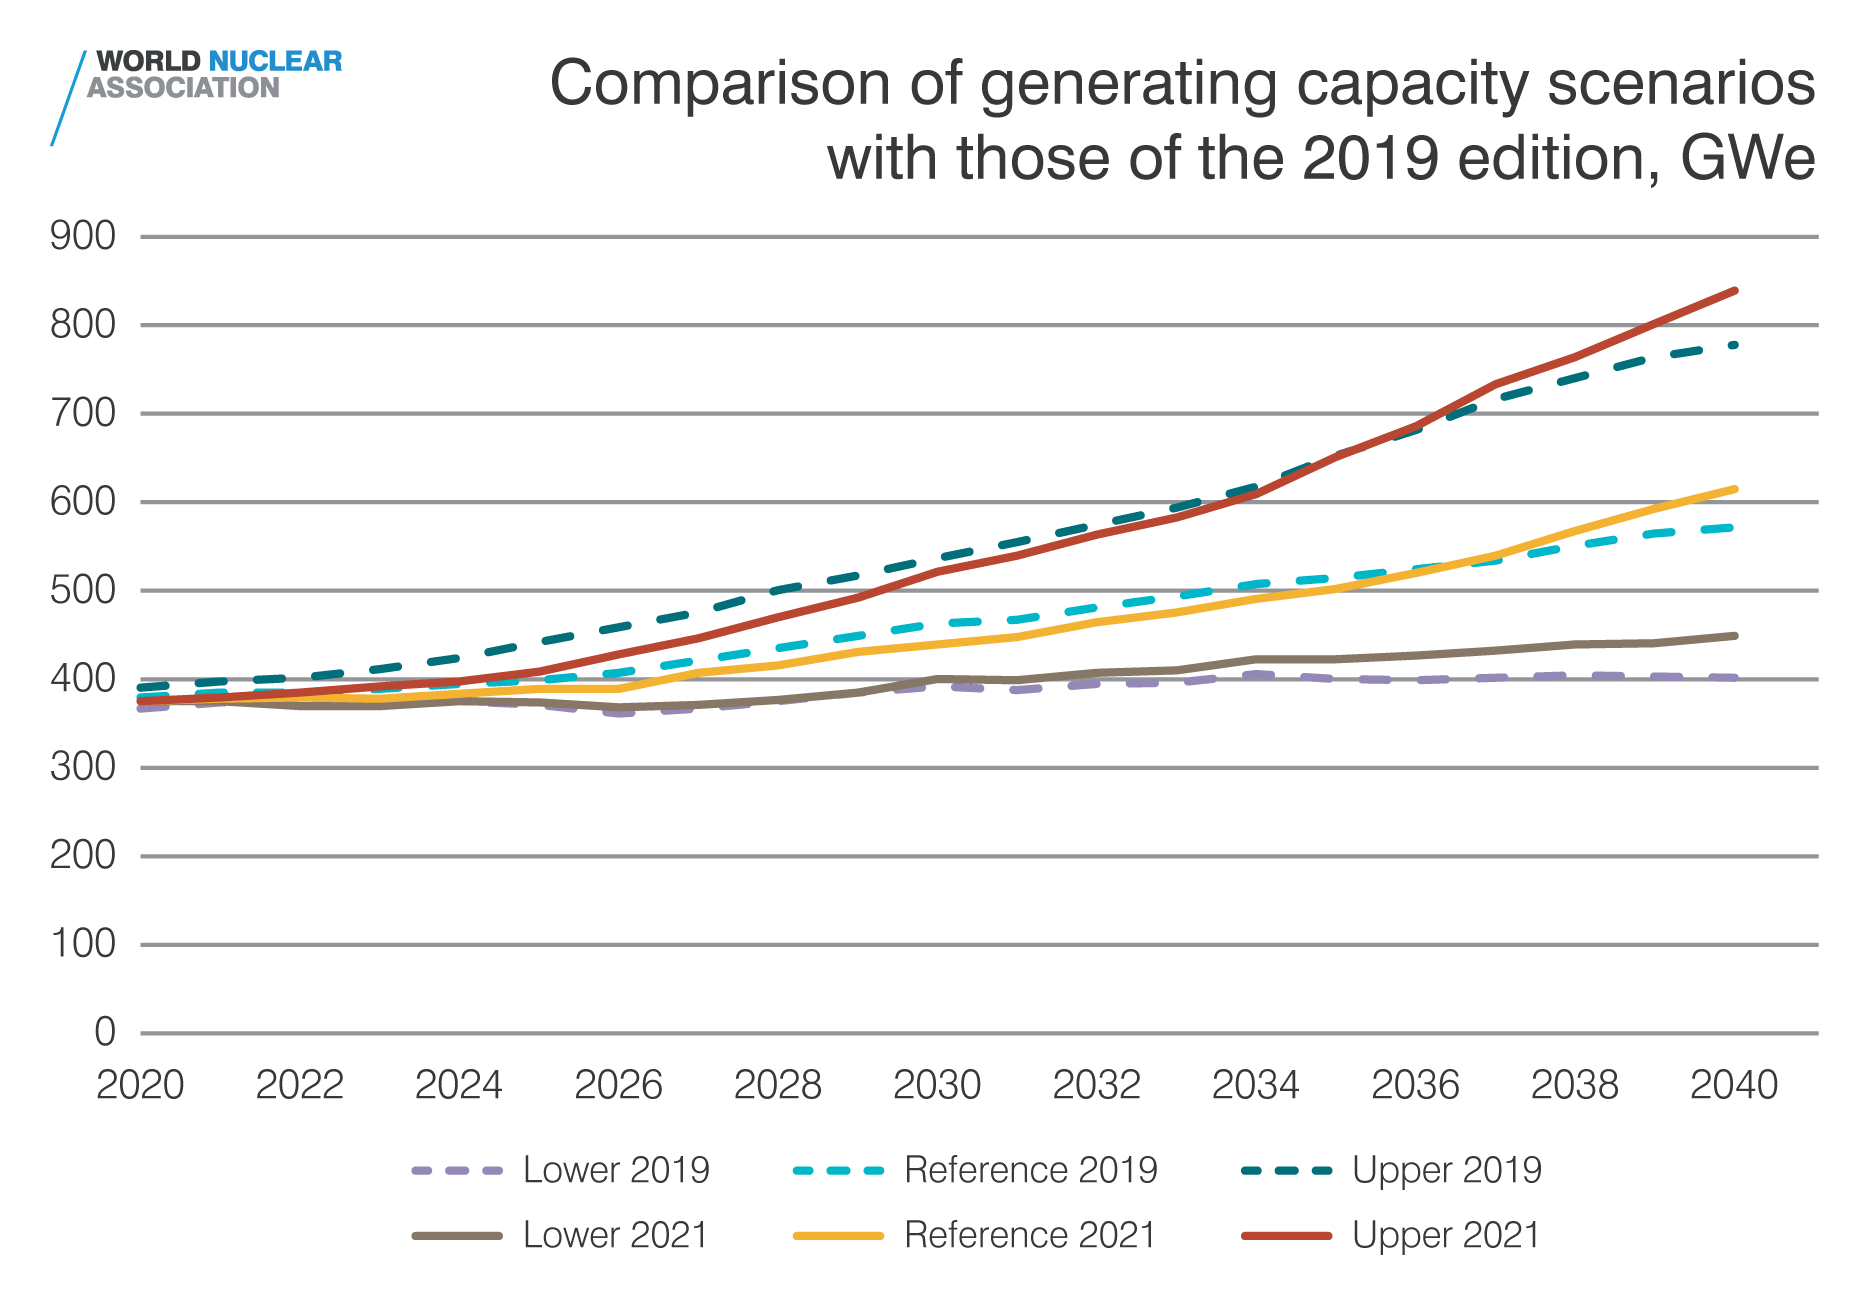 Comparison of 2021 and 2019 generation capacity scenarios